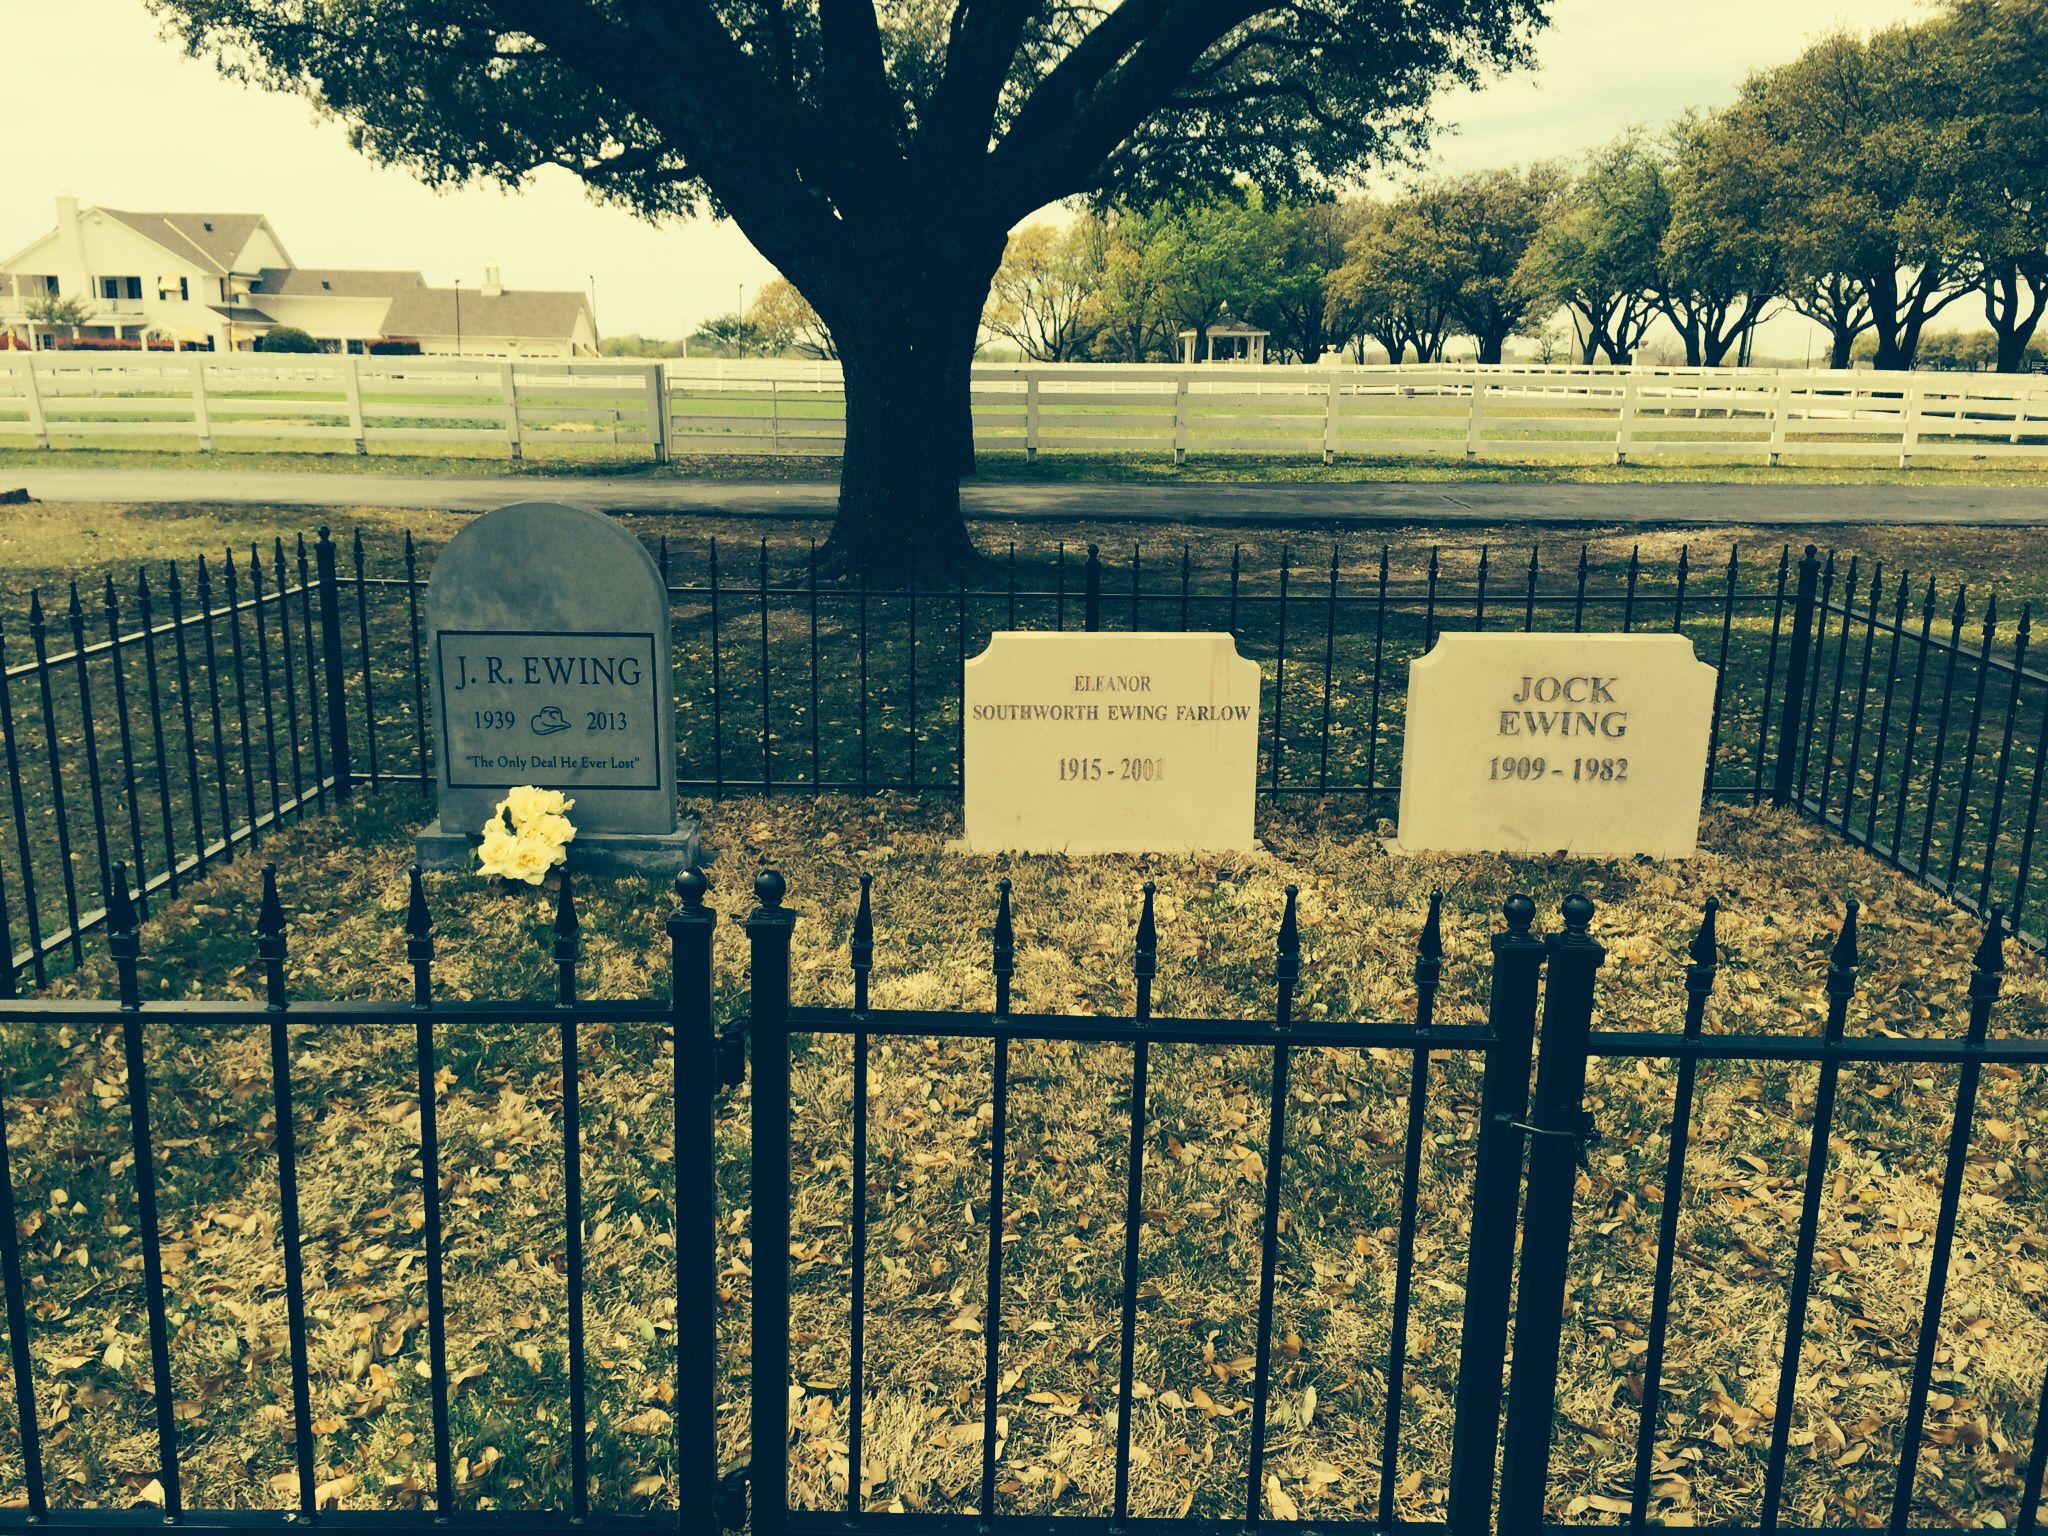 Dallas SouthFork ranch Cemetery | Dallas | Pinterest | Dallas, TVs ...